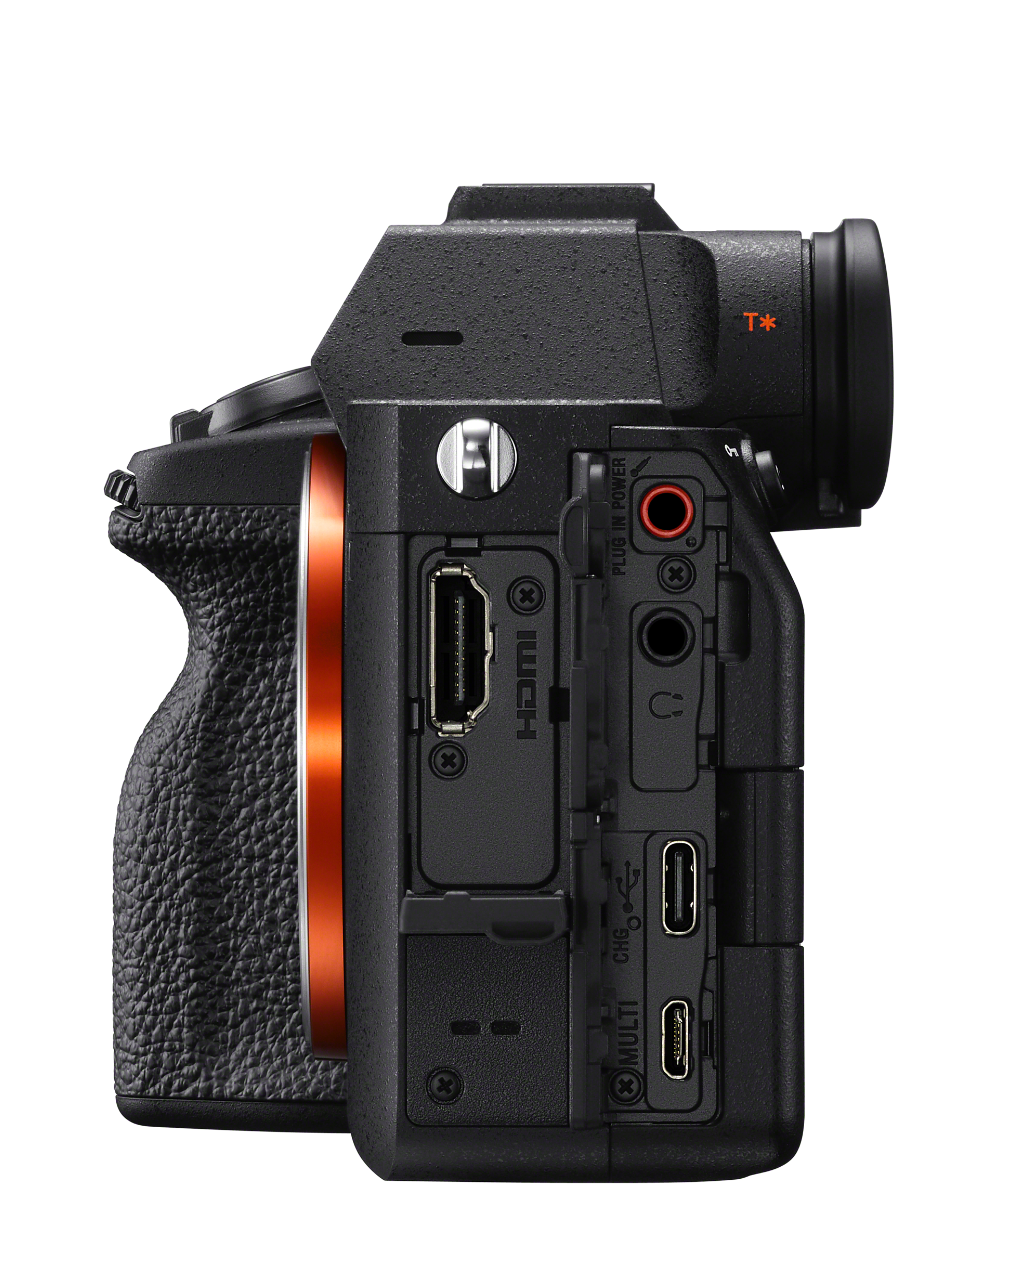 Sony A7 Mark IV, FE 28-70mm F/3.5-5.6 OSS Lens.